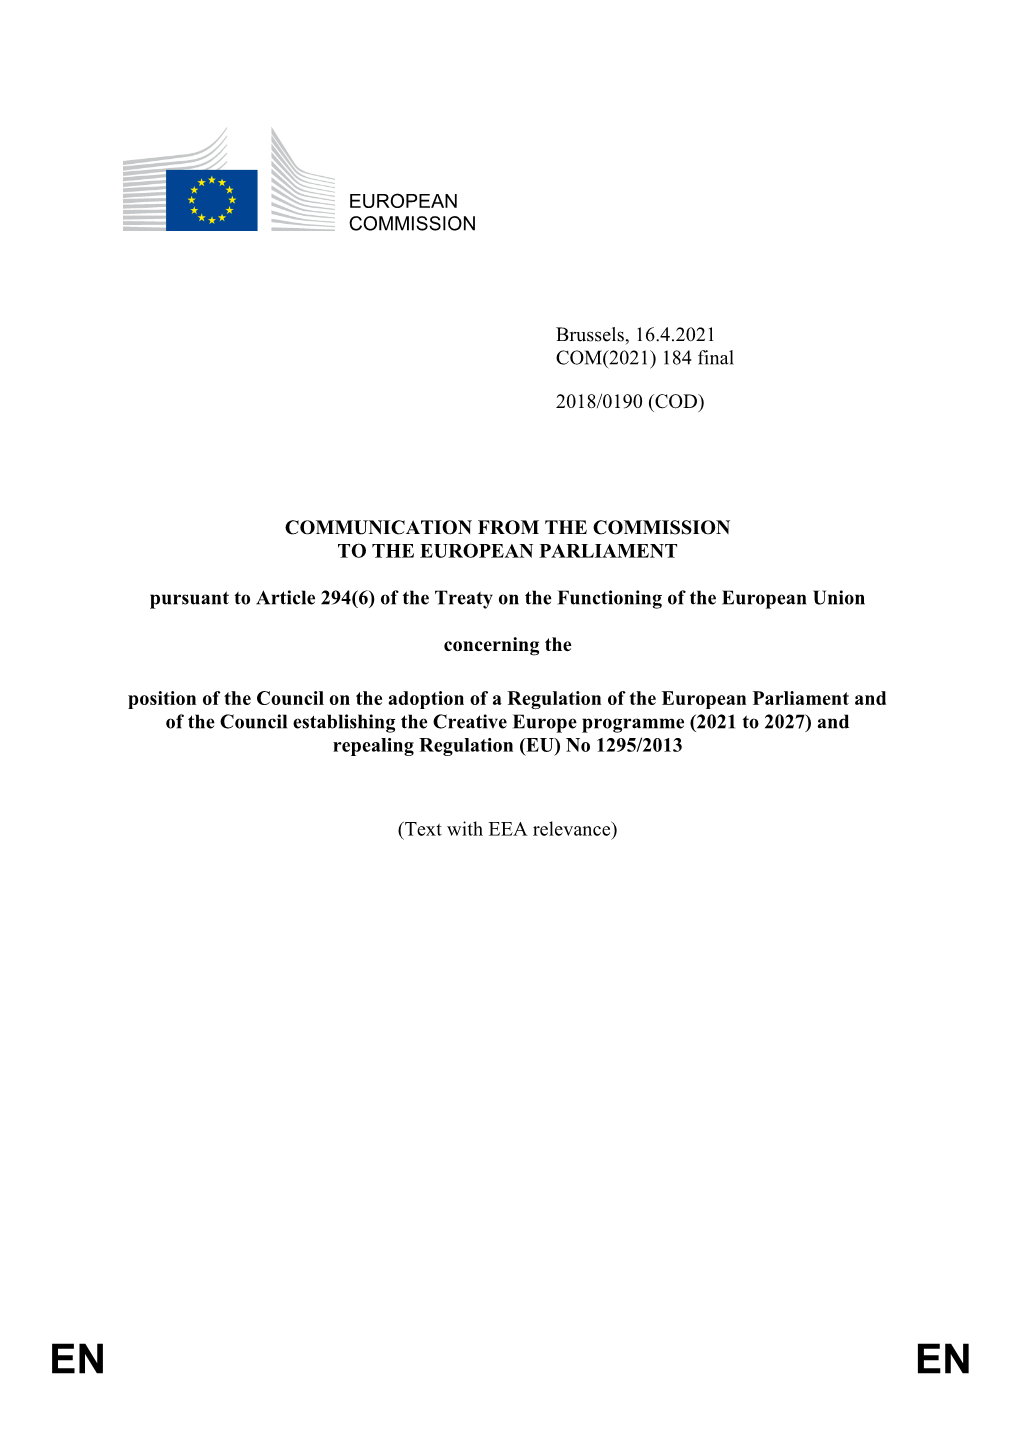 EUROPEAN COMMISSION Brussels, 16.4.2021 COM(2021)